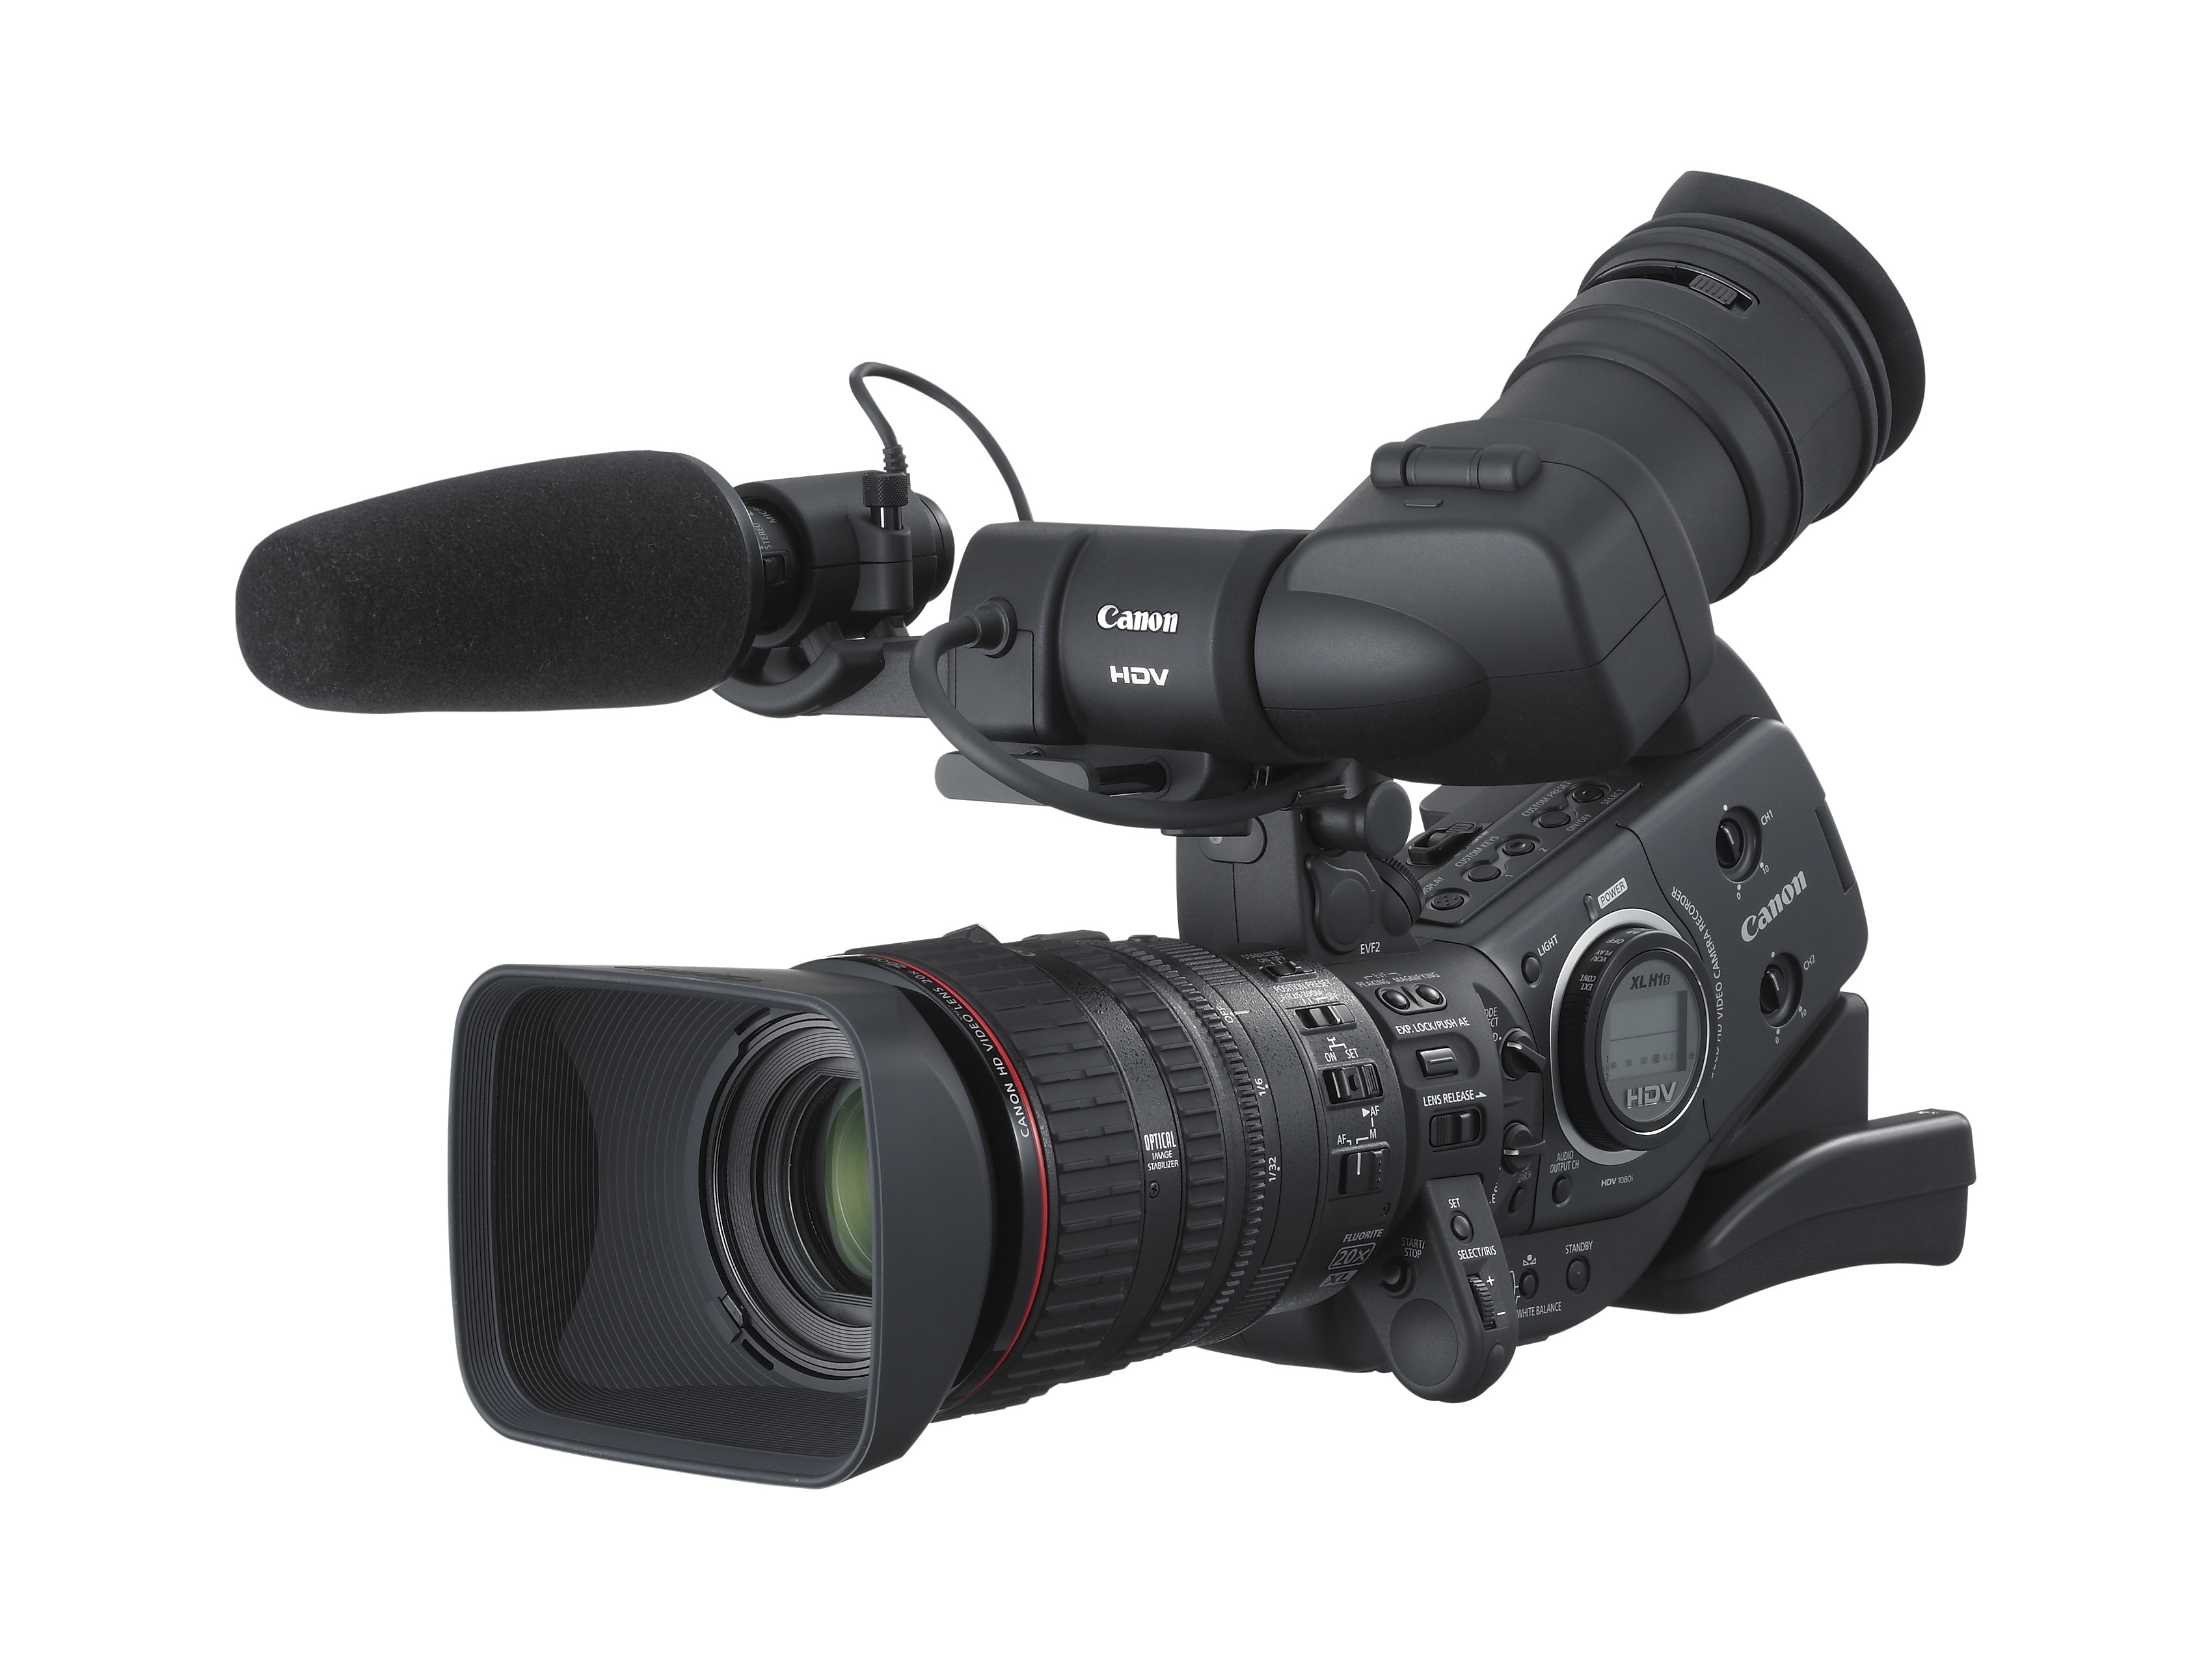 C4D录影机放映机摄像机模型 c4d模型素材免费下载 C4D在线